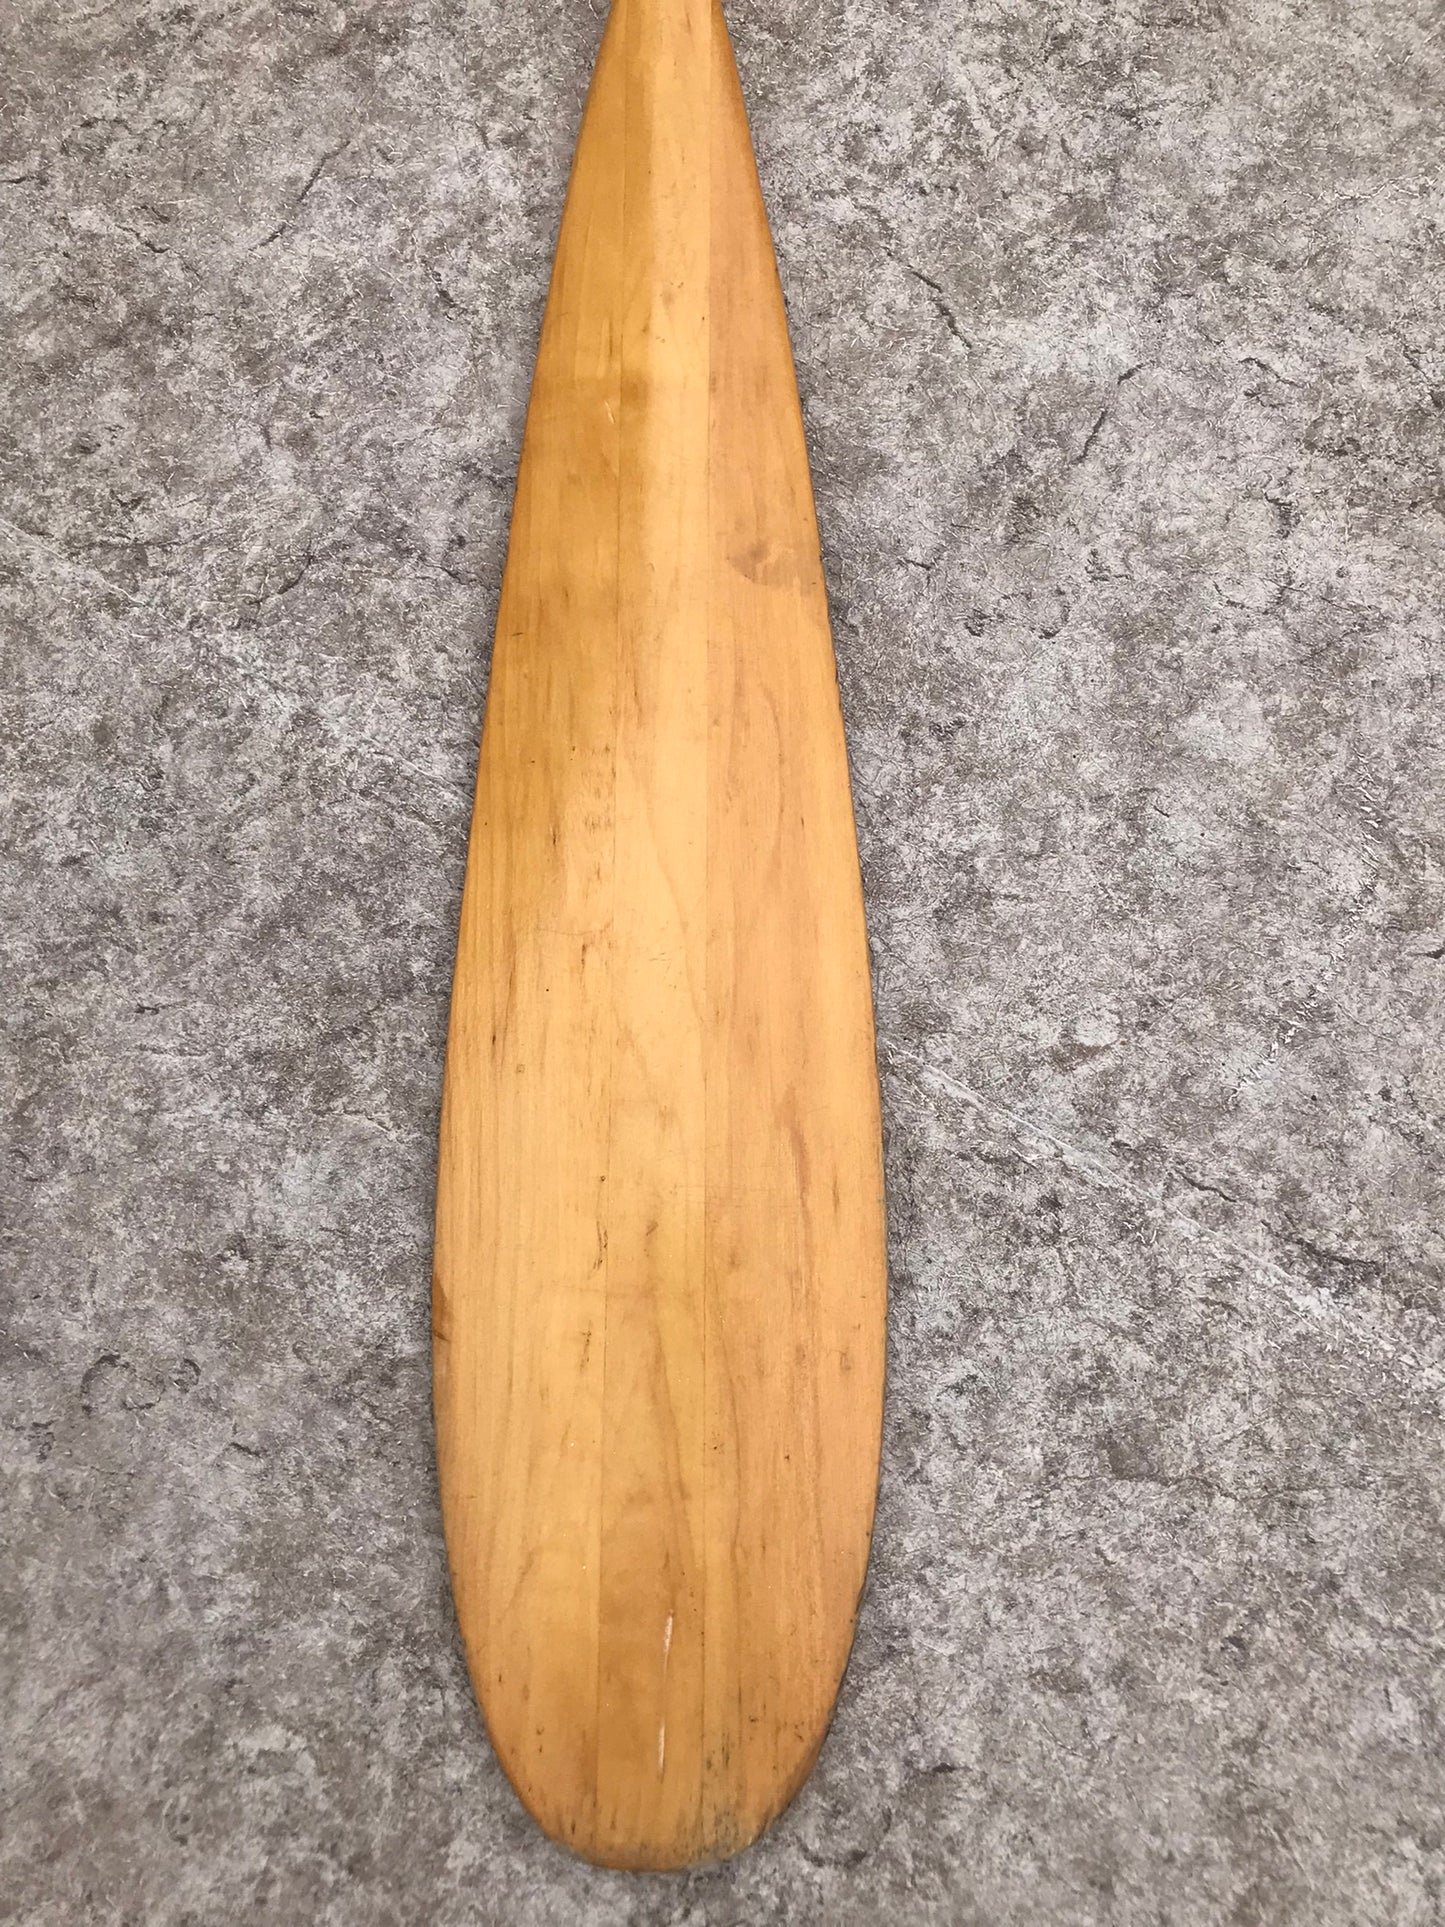 Kayak Canoe Solid Wood Paddle 60 inch Very Nice